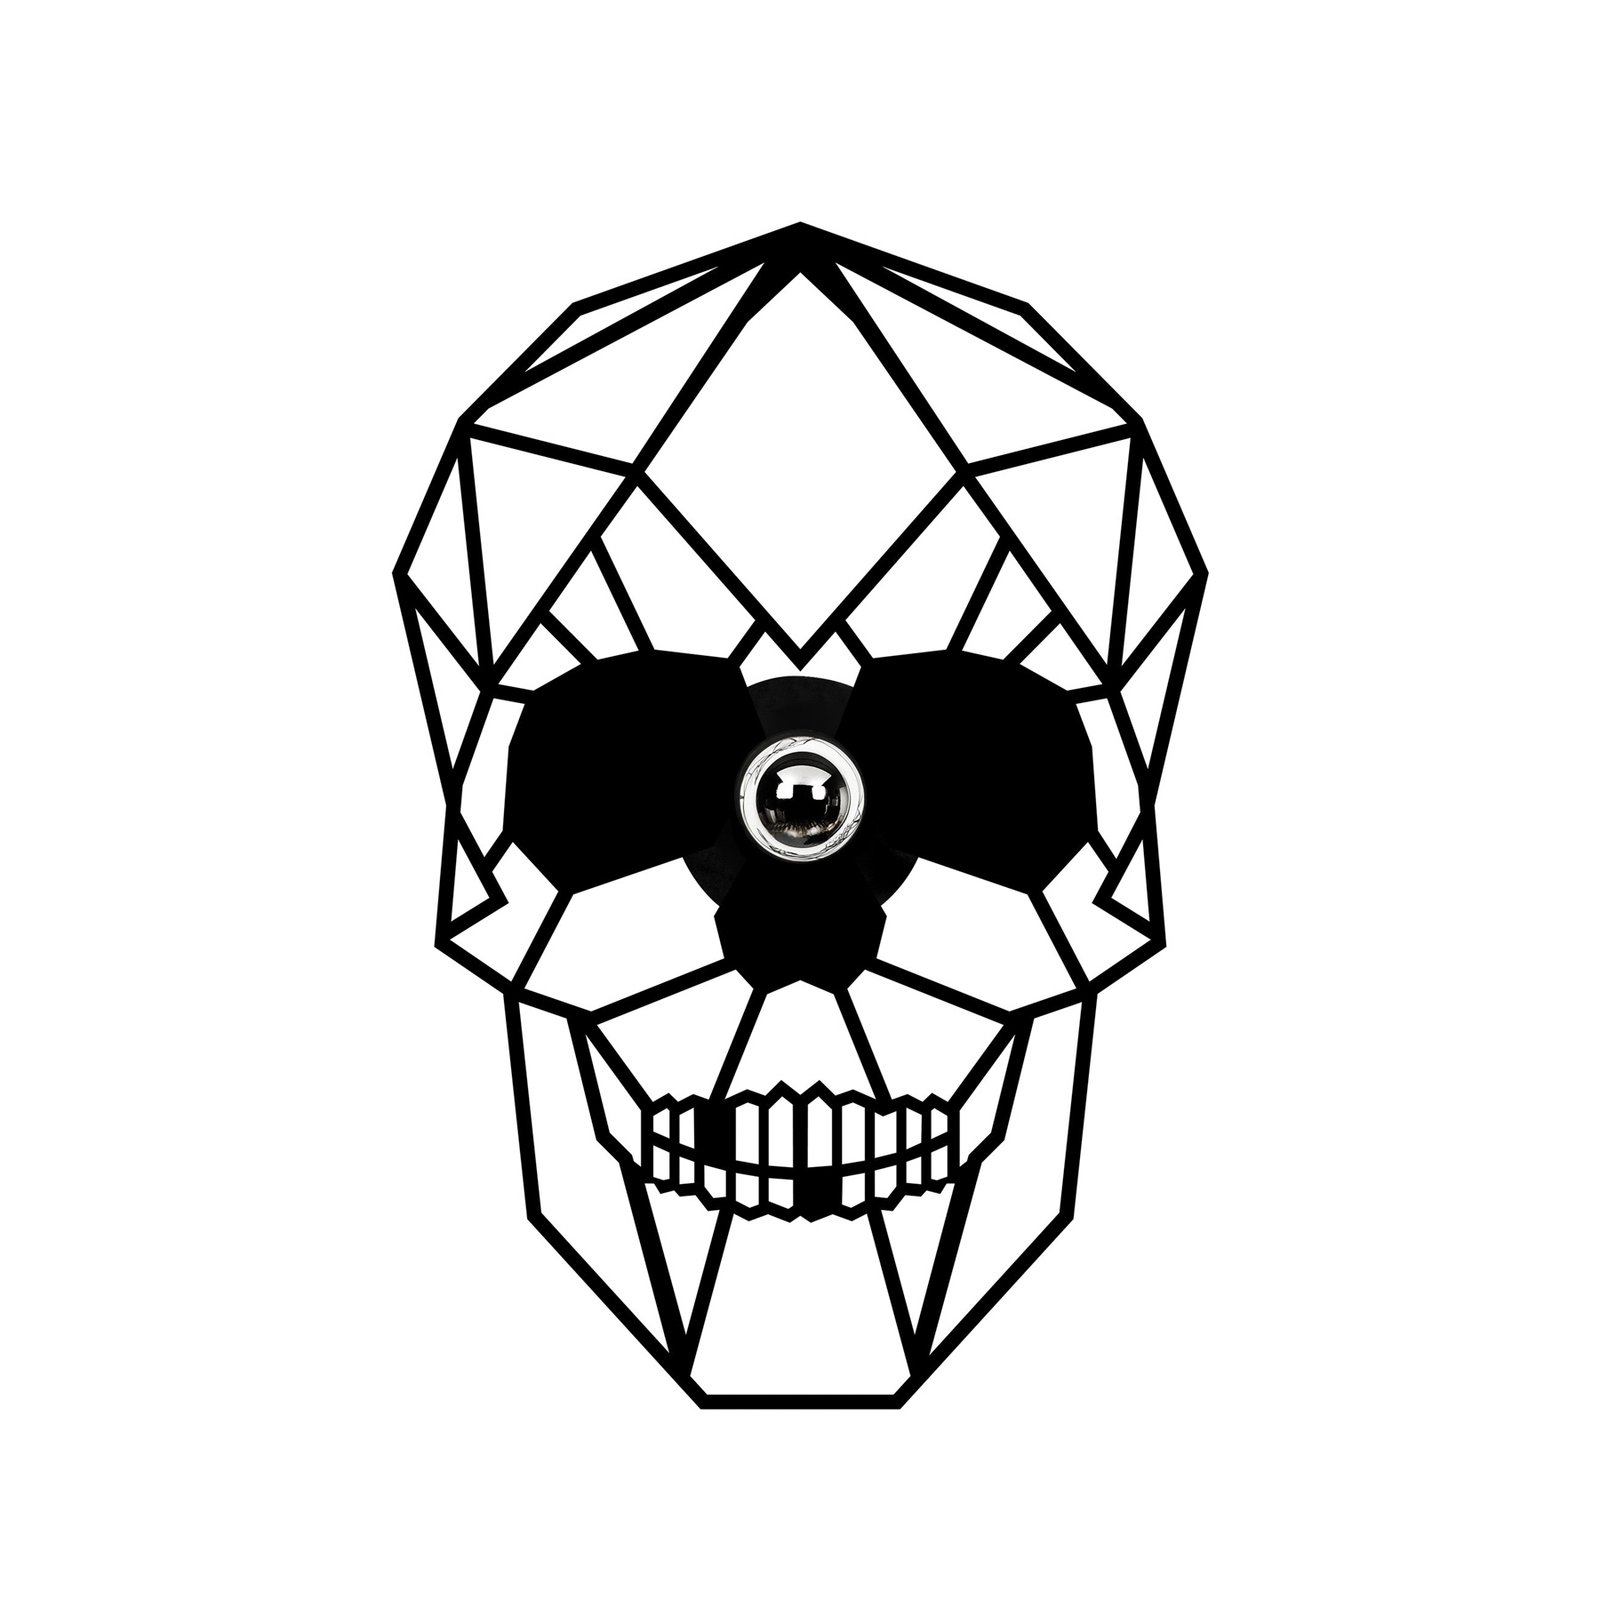 W-050 wall lamp, black skull design, laser-cut